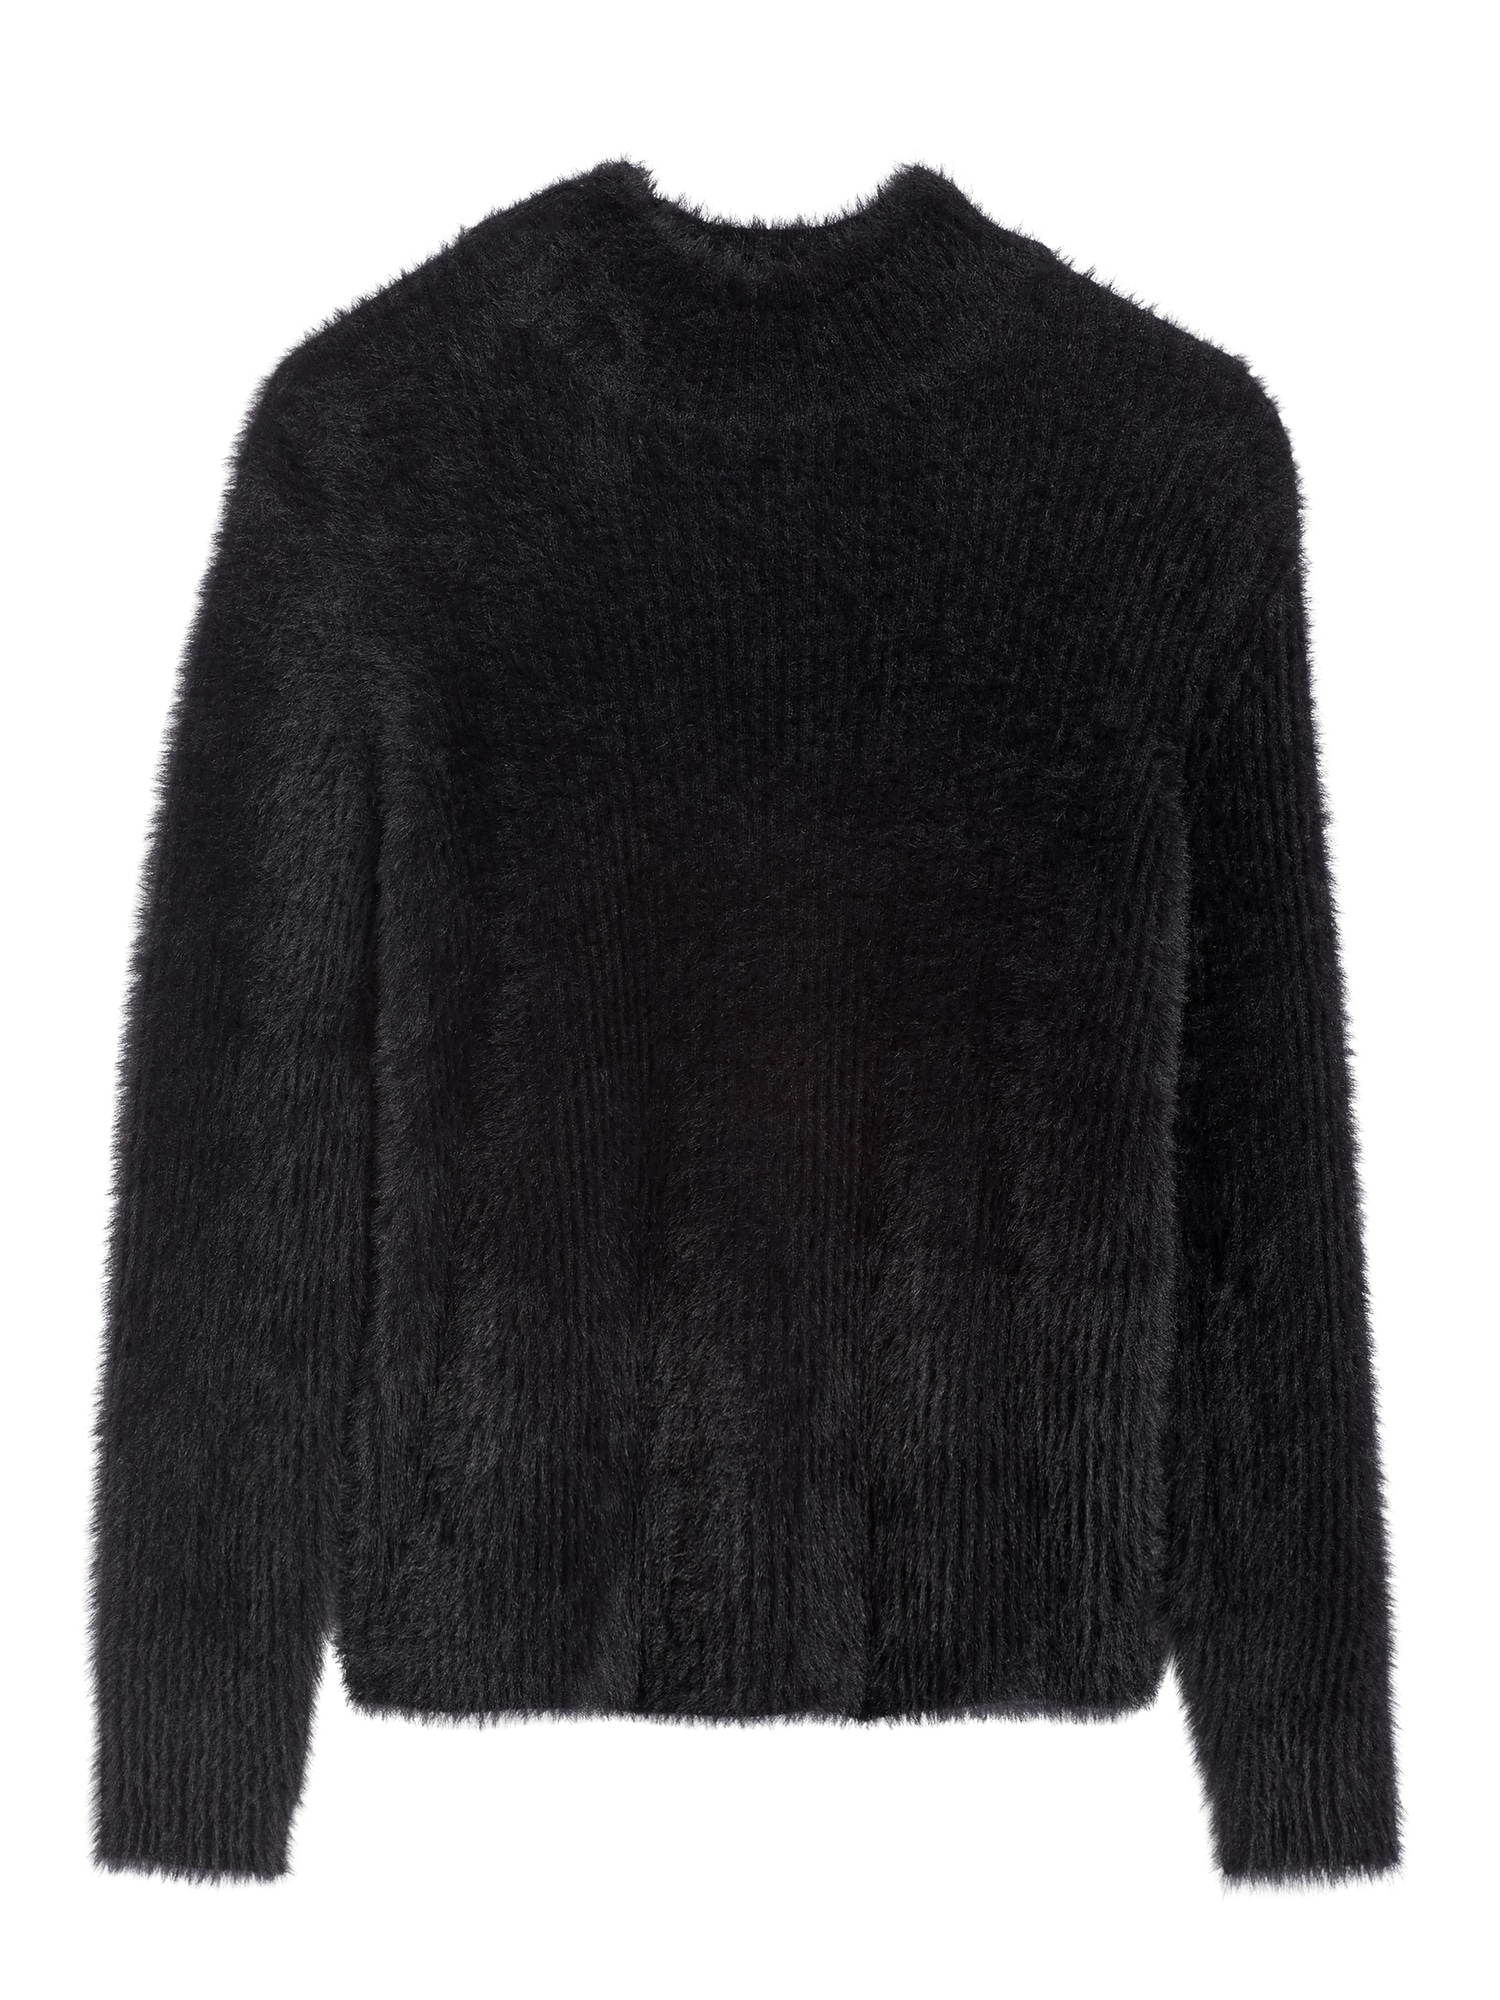 black fuzzy sweatshirt